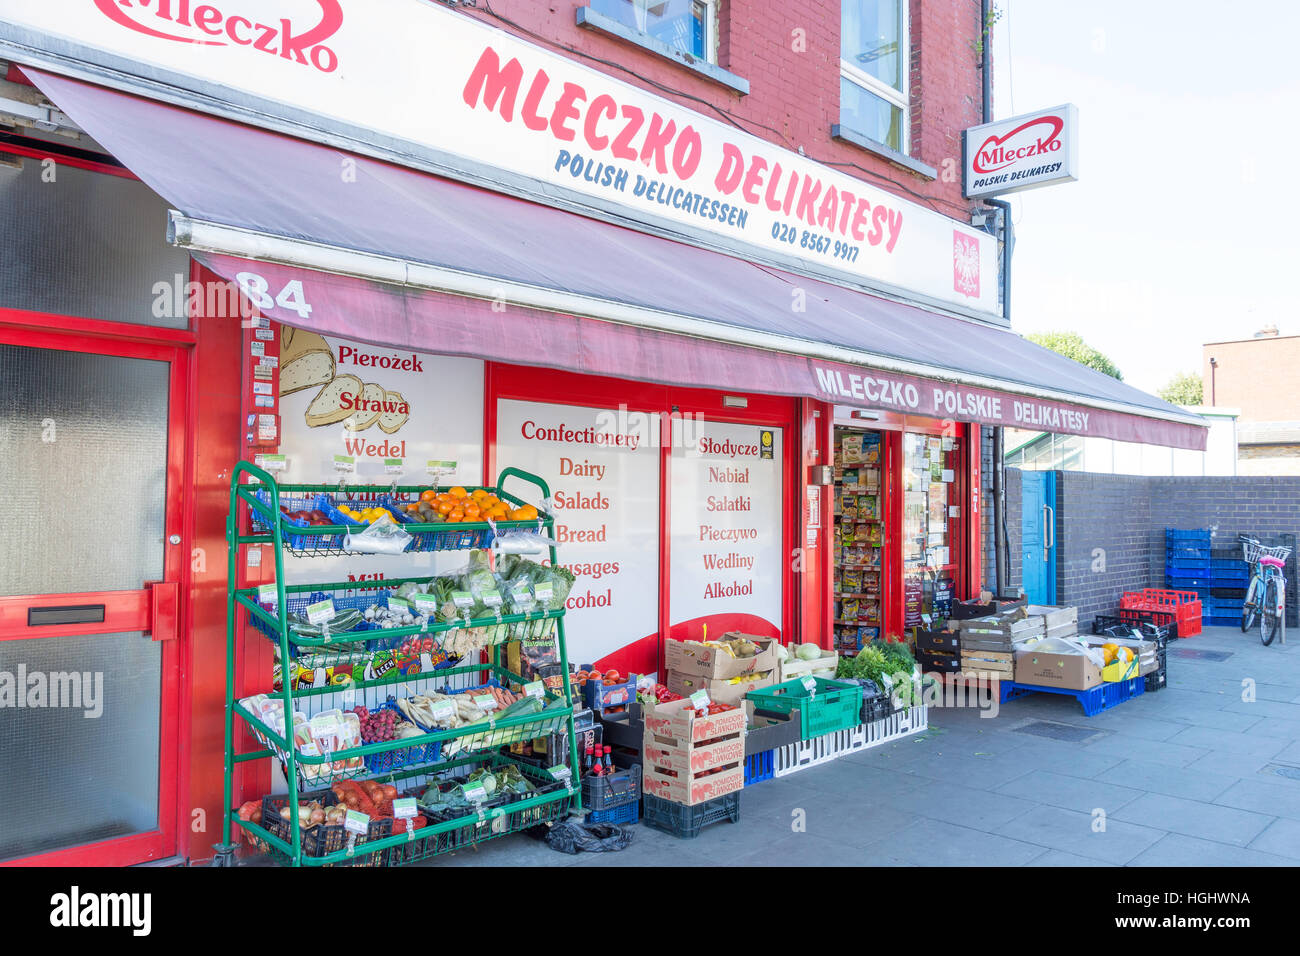 Mleczko Delicatessen polaca, South Ealing Road, Ealing, London Borough of Ealing, Greater London, England, Reino Unido Foto de stock